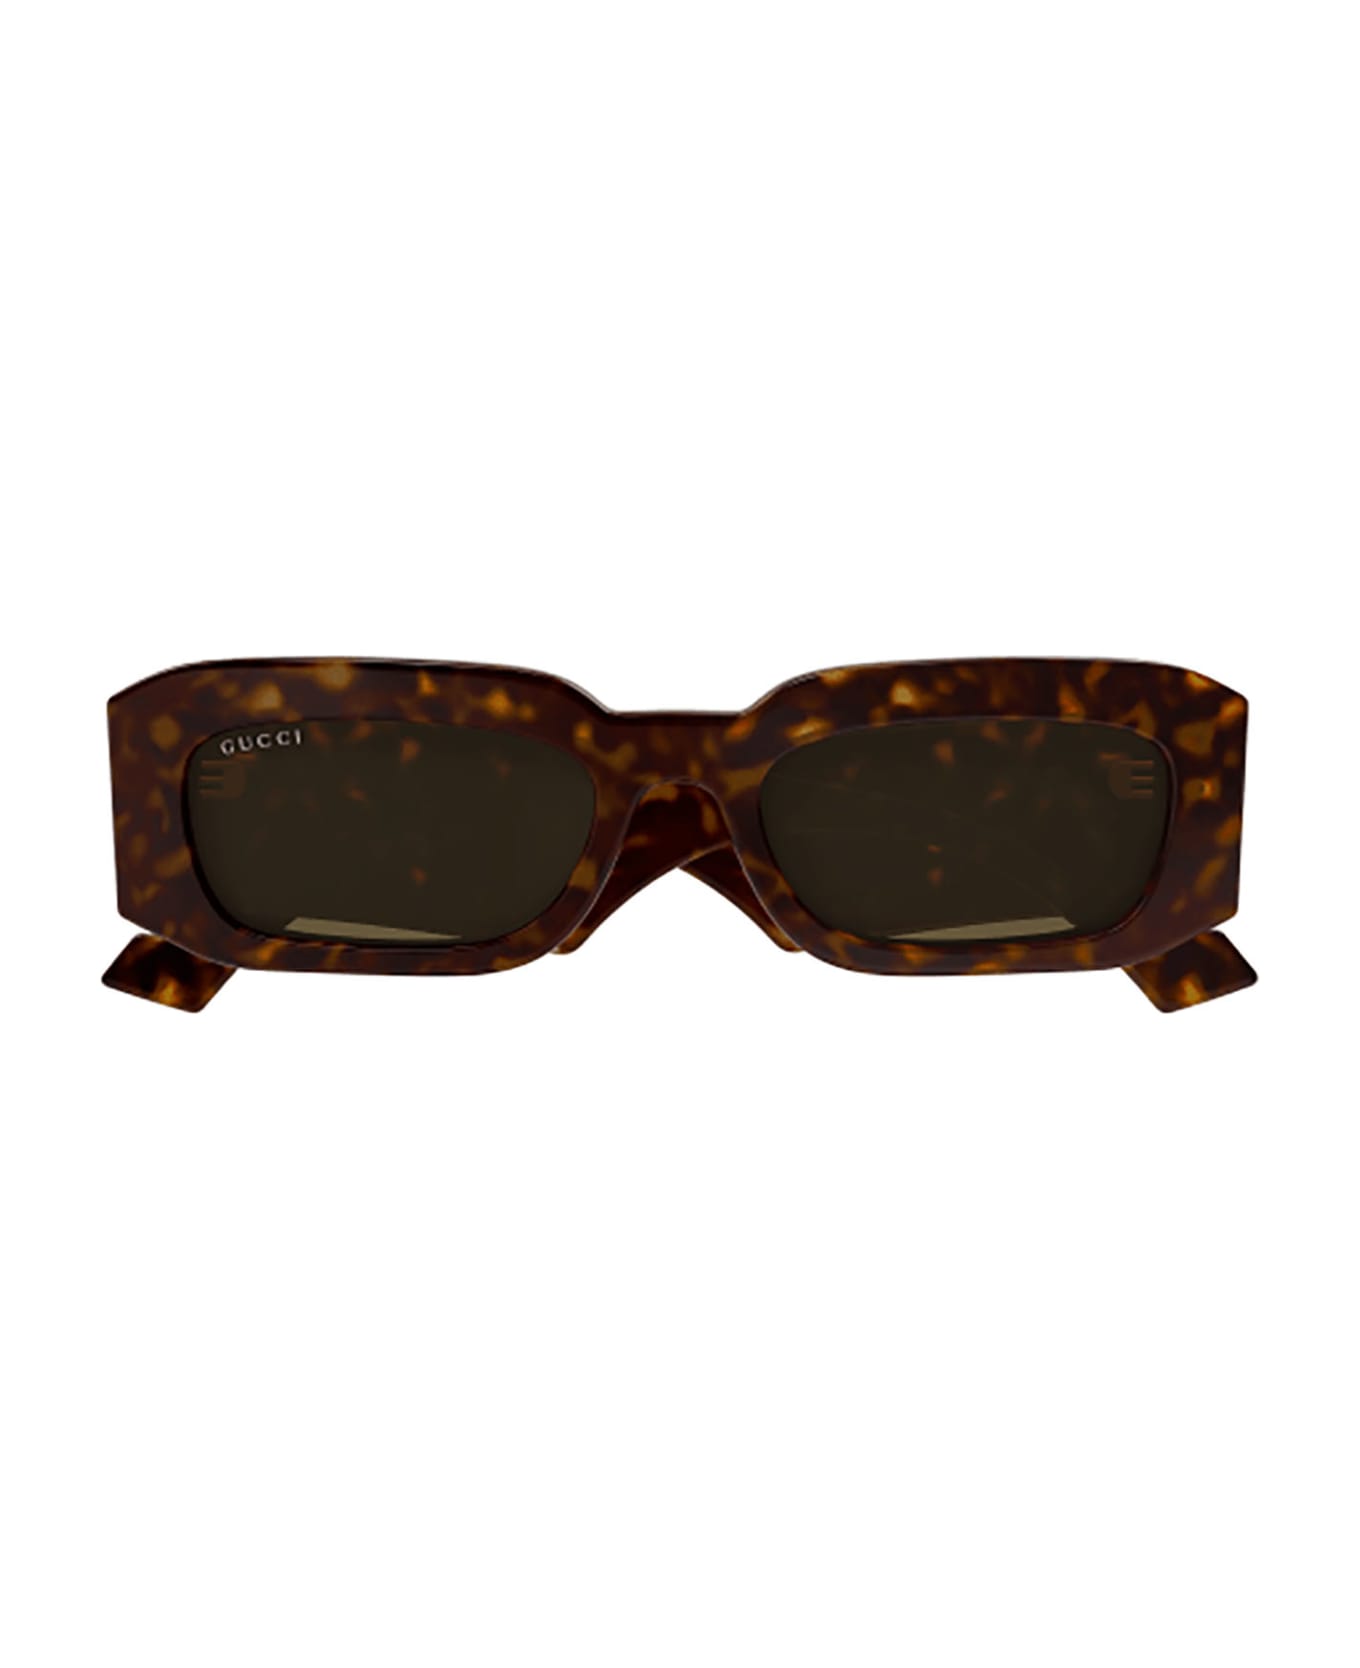 Gucci Eyewear Gg1426s Sunglasses - 002 havana havana brown サングラス